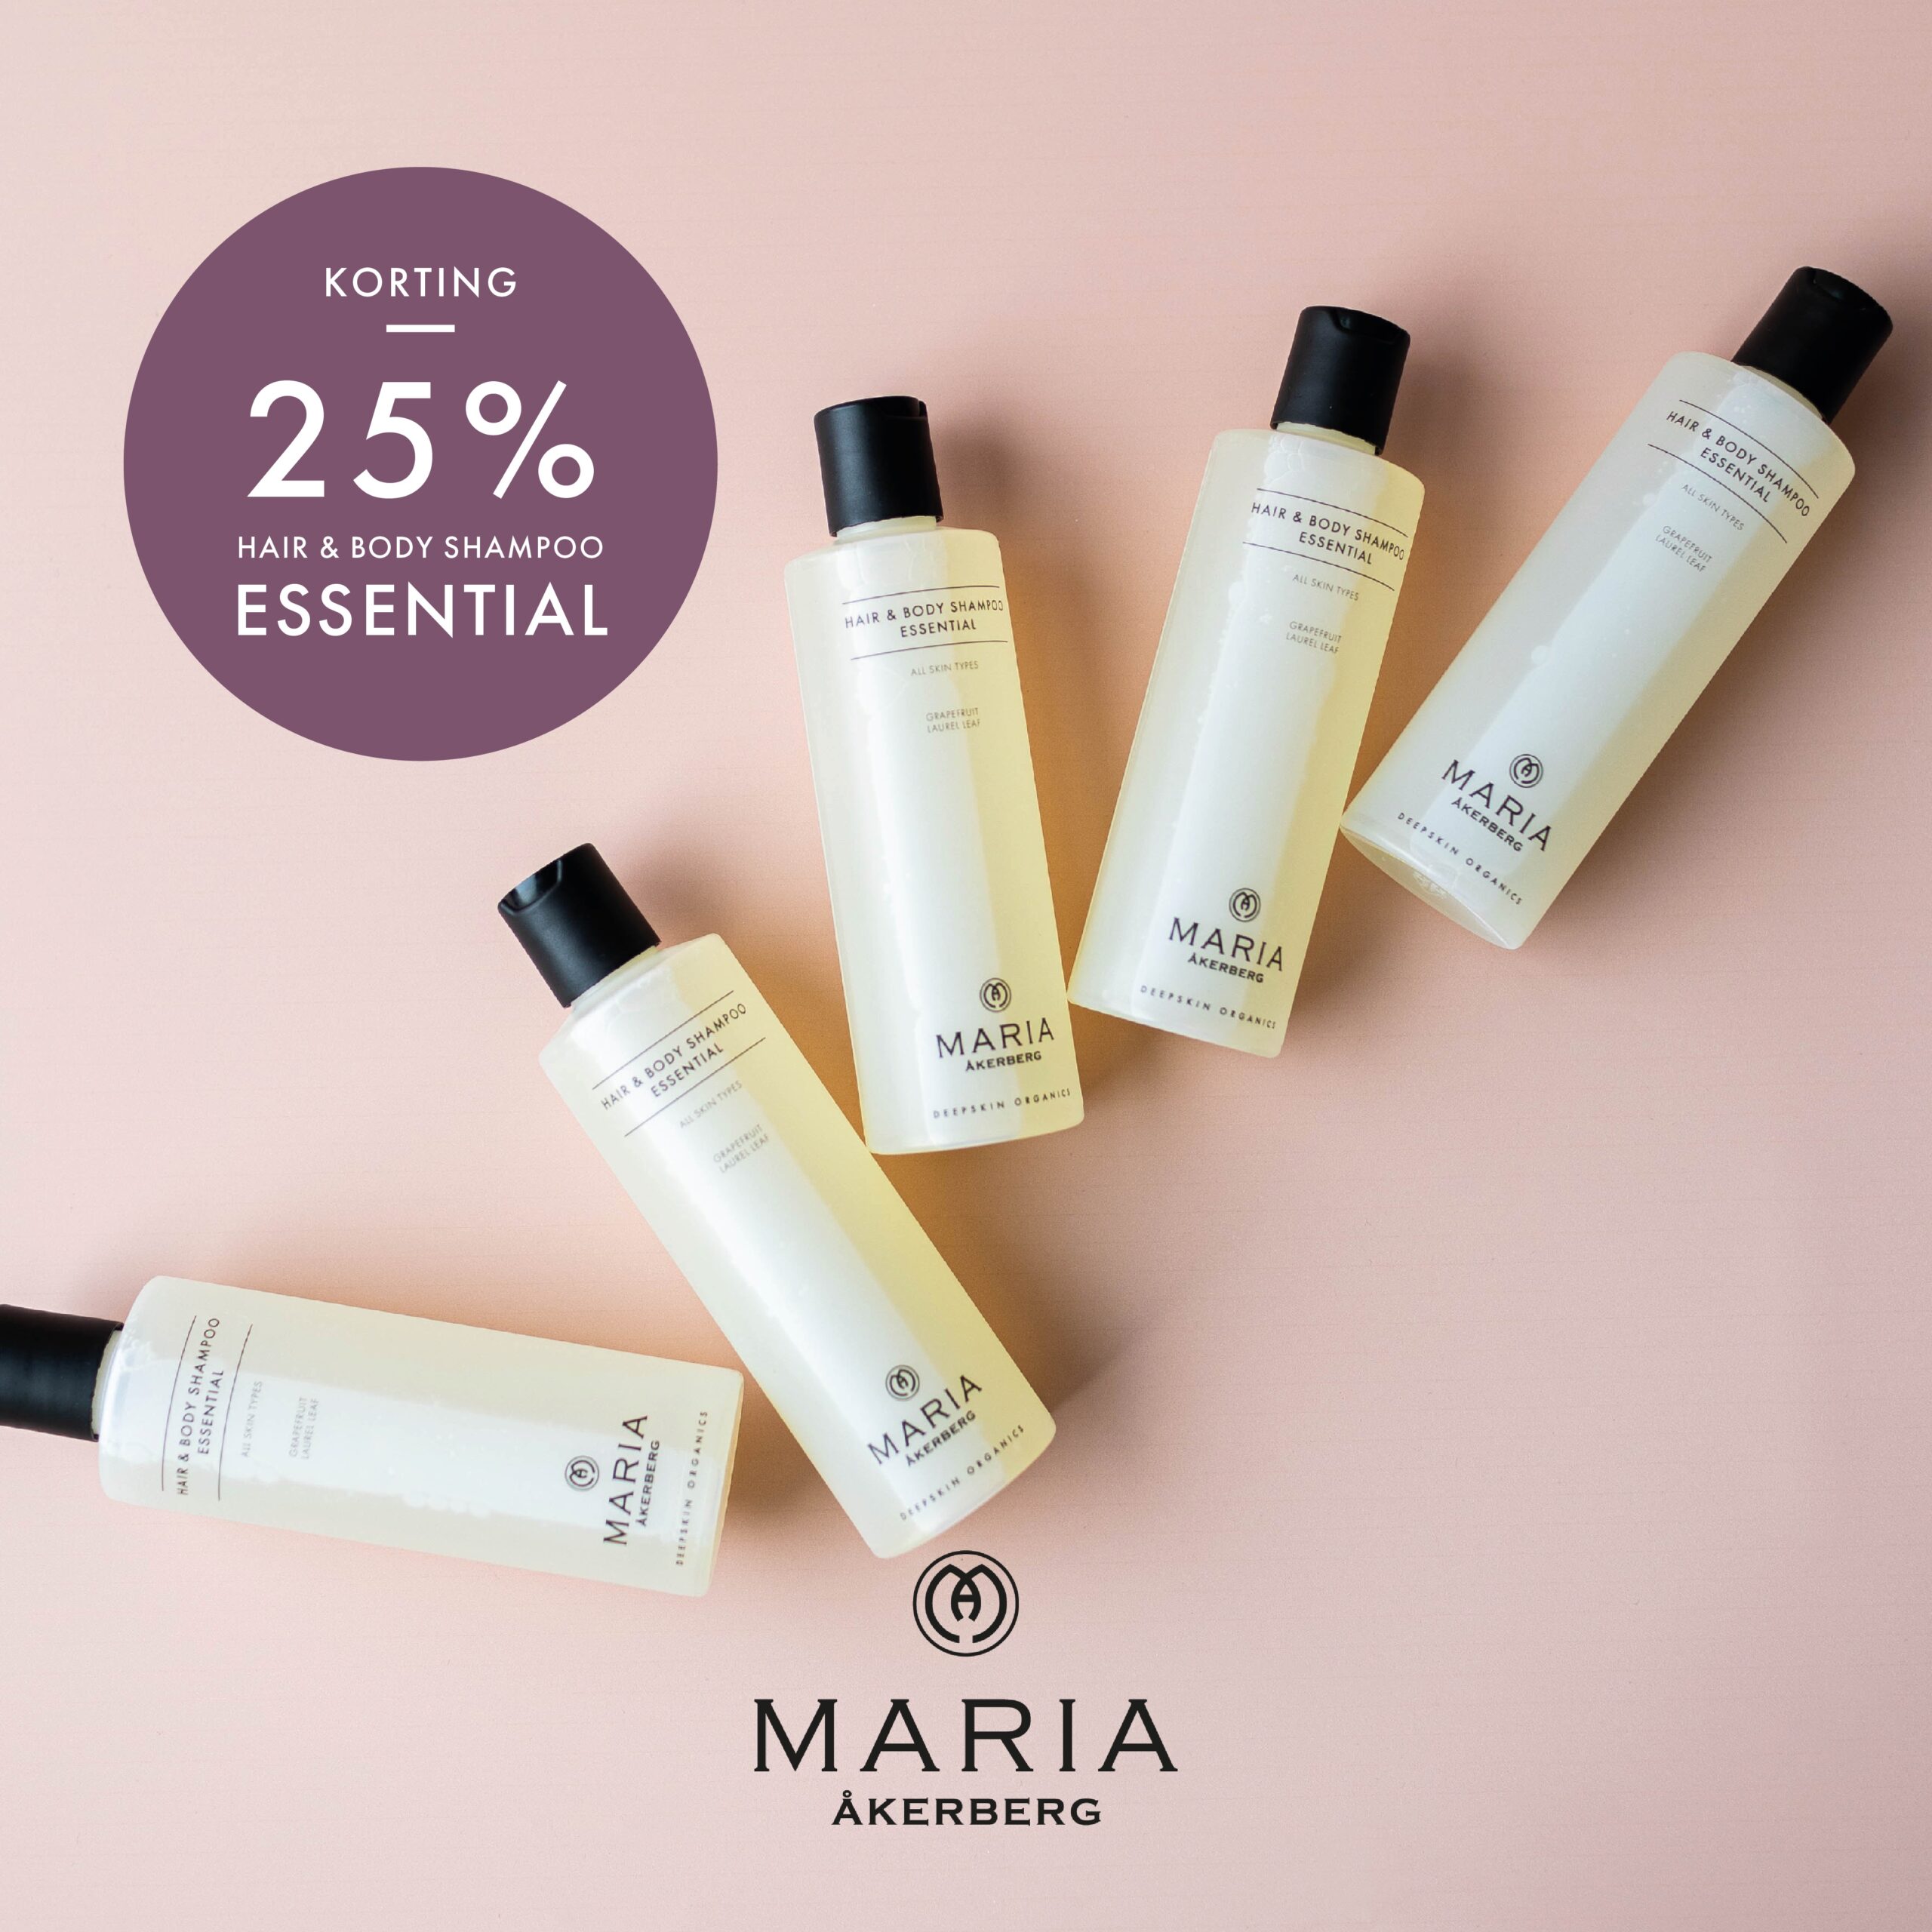 Hair & Body Shampoo Essential aanbieding MARIA ÅKERBERG bij Soin Total